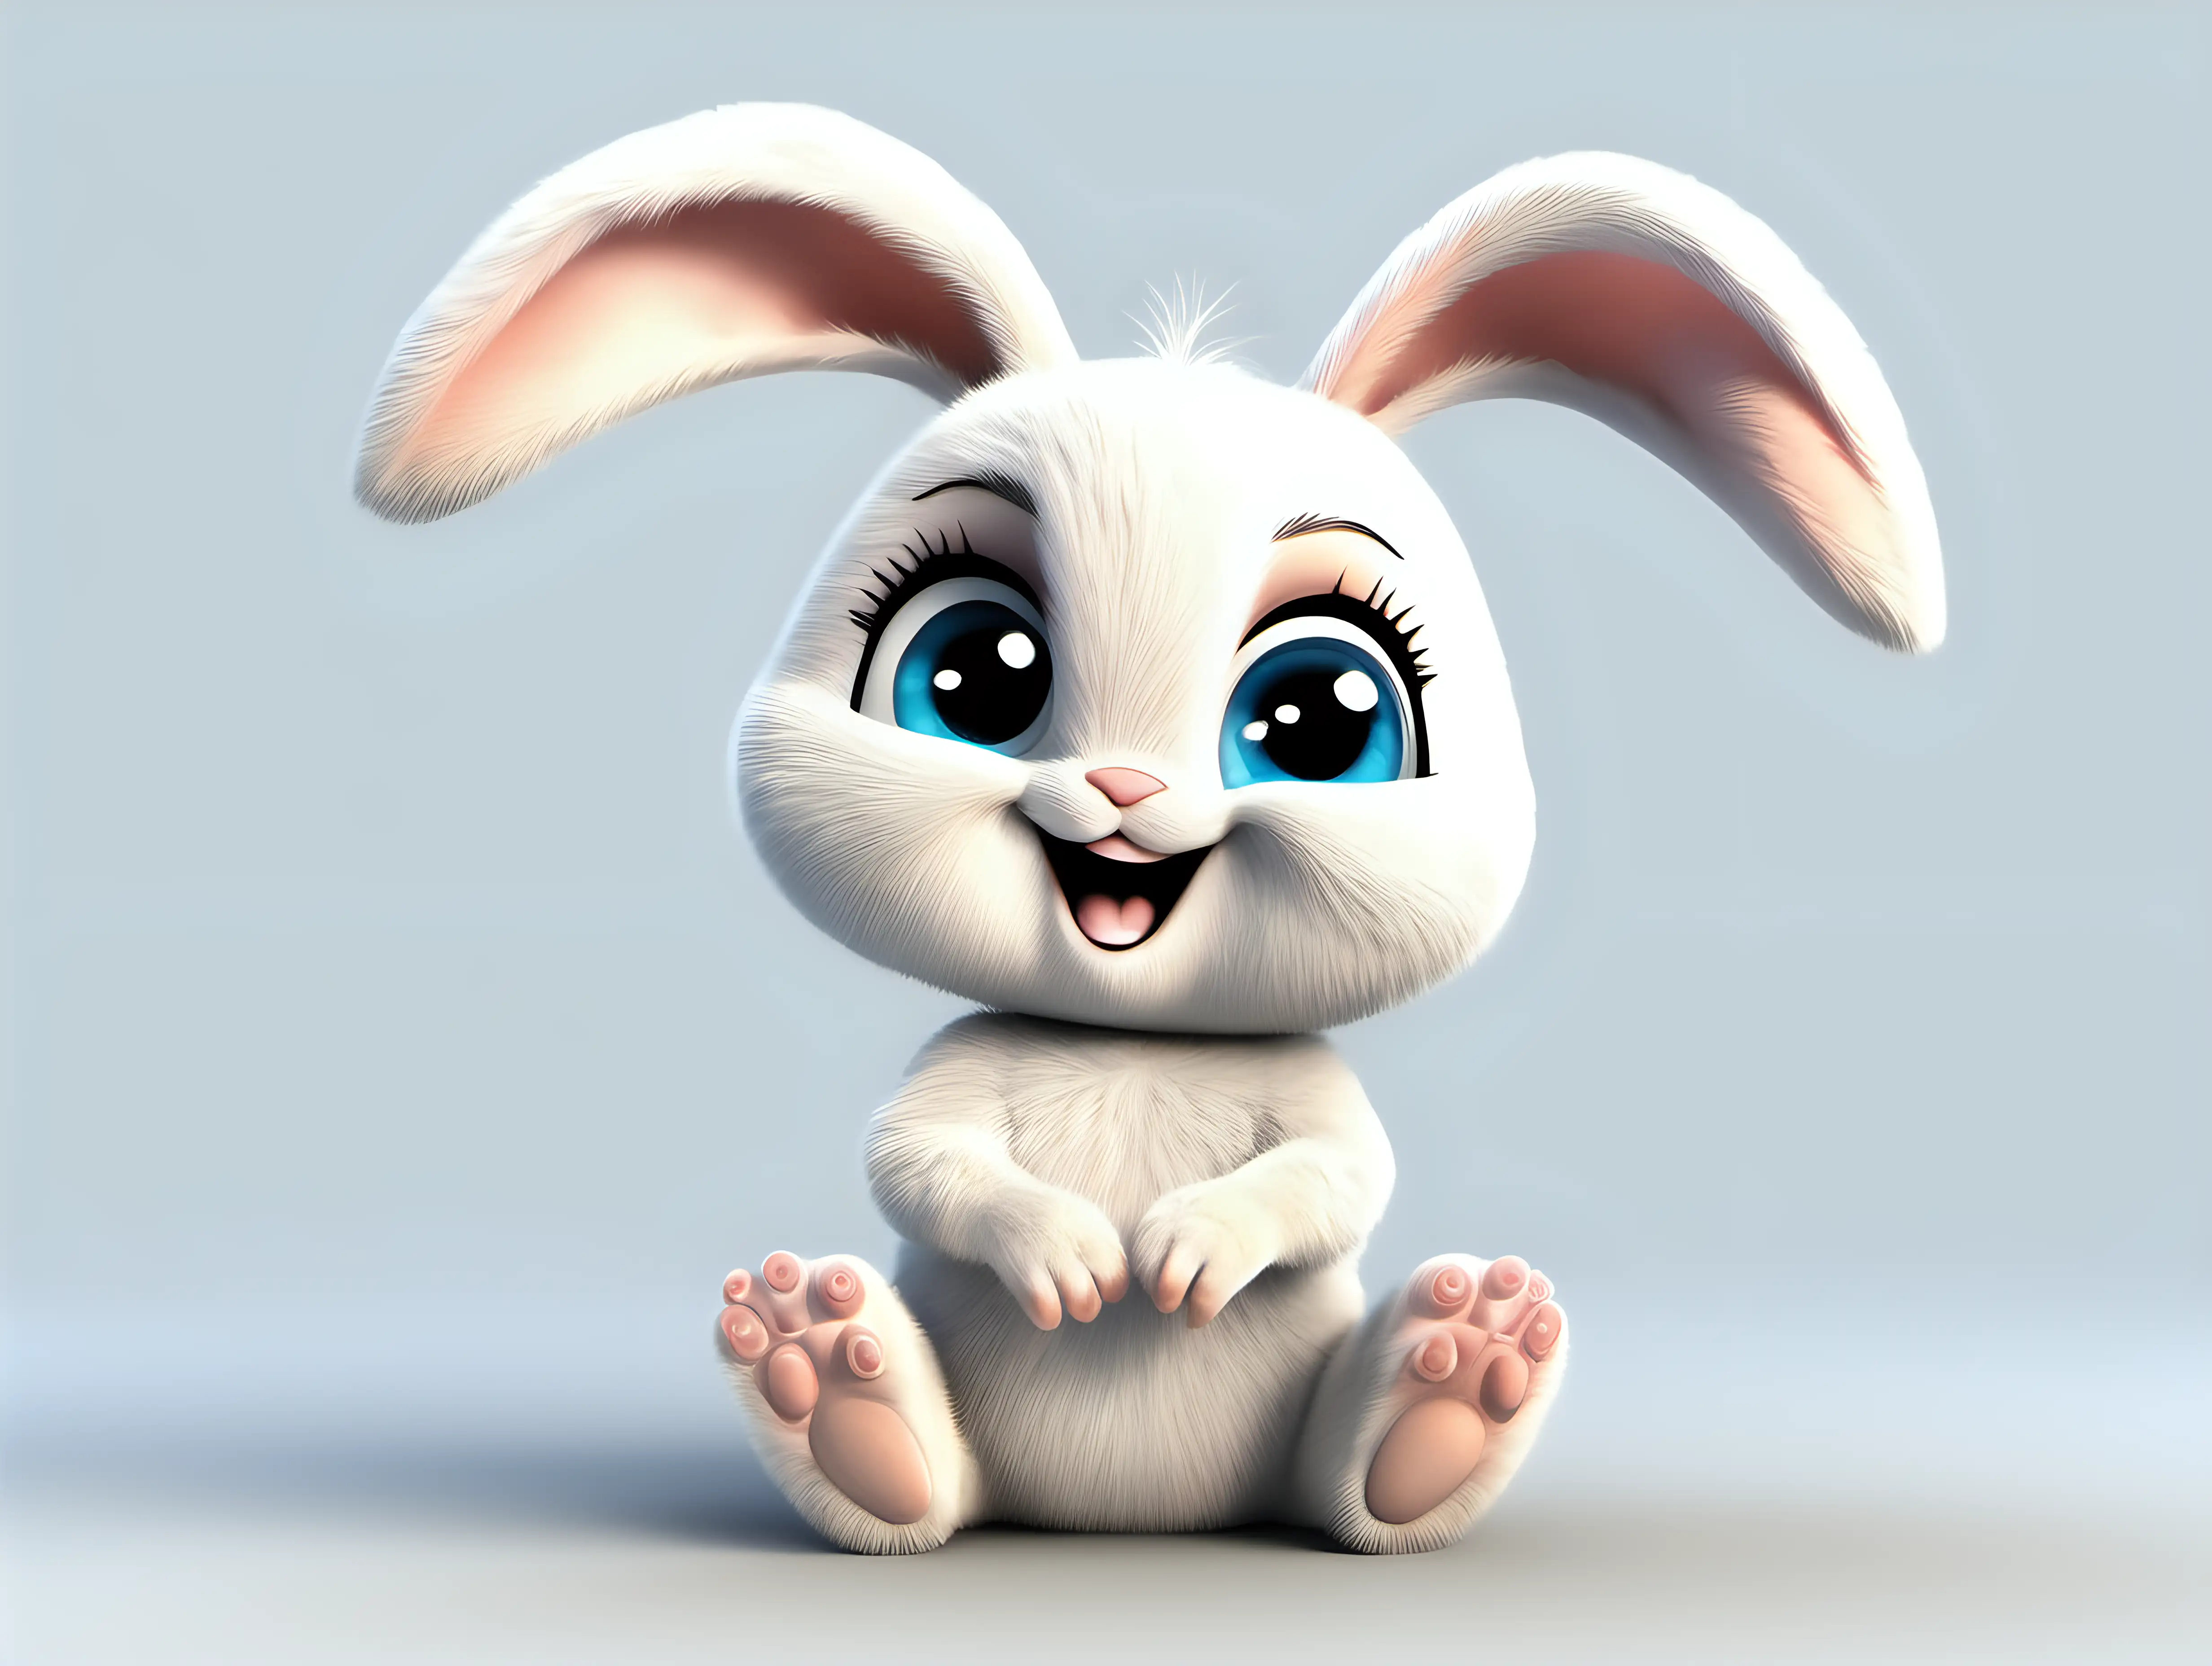 Friendly Animated Cartoon Baby Rabbit Full Body Illustration on White Background